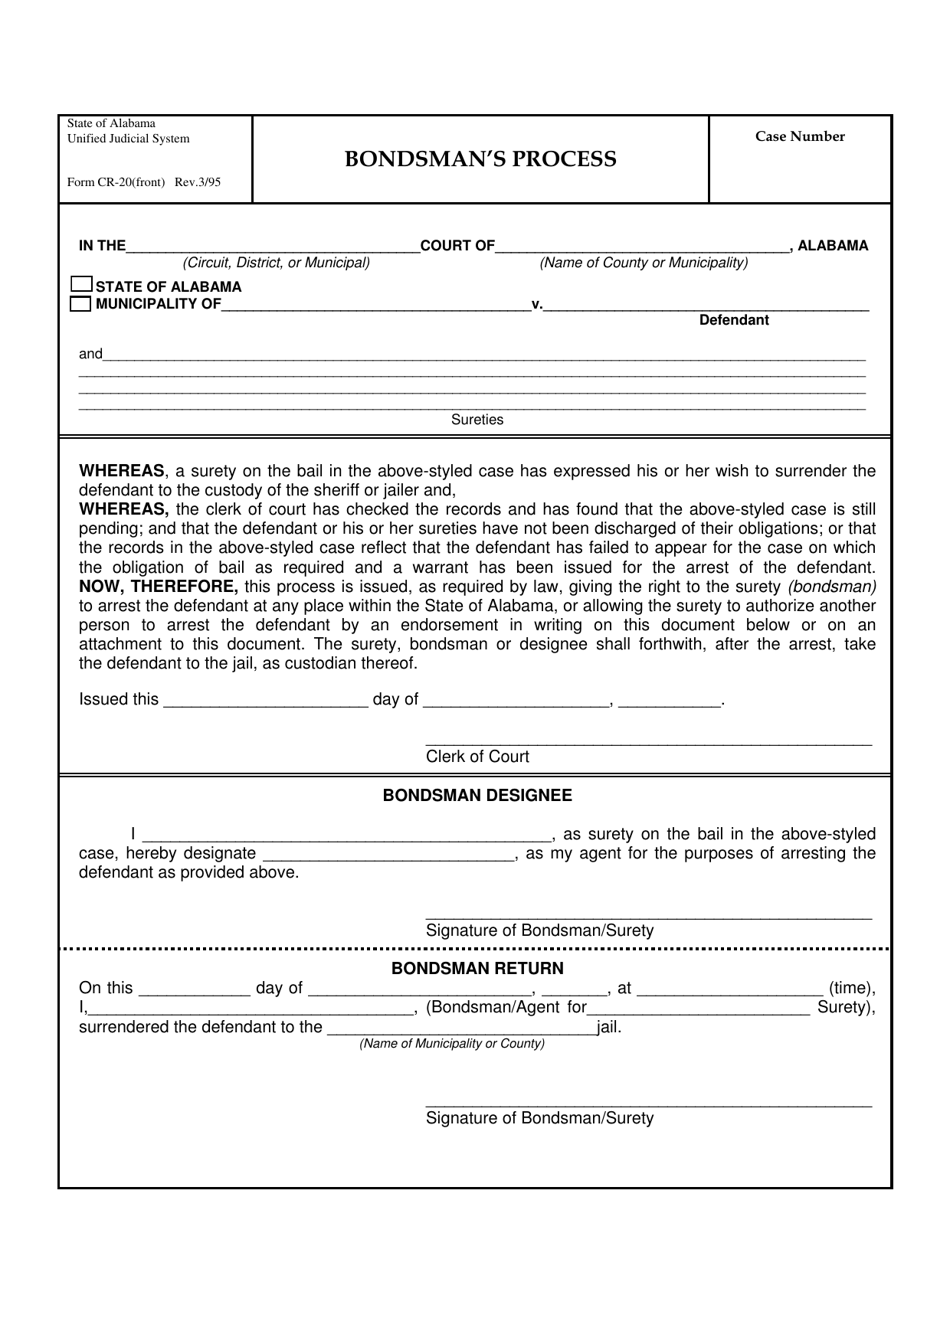 Form CR-20 Bondsmans Process - Alabama, Page 1